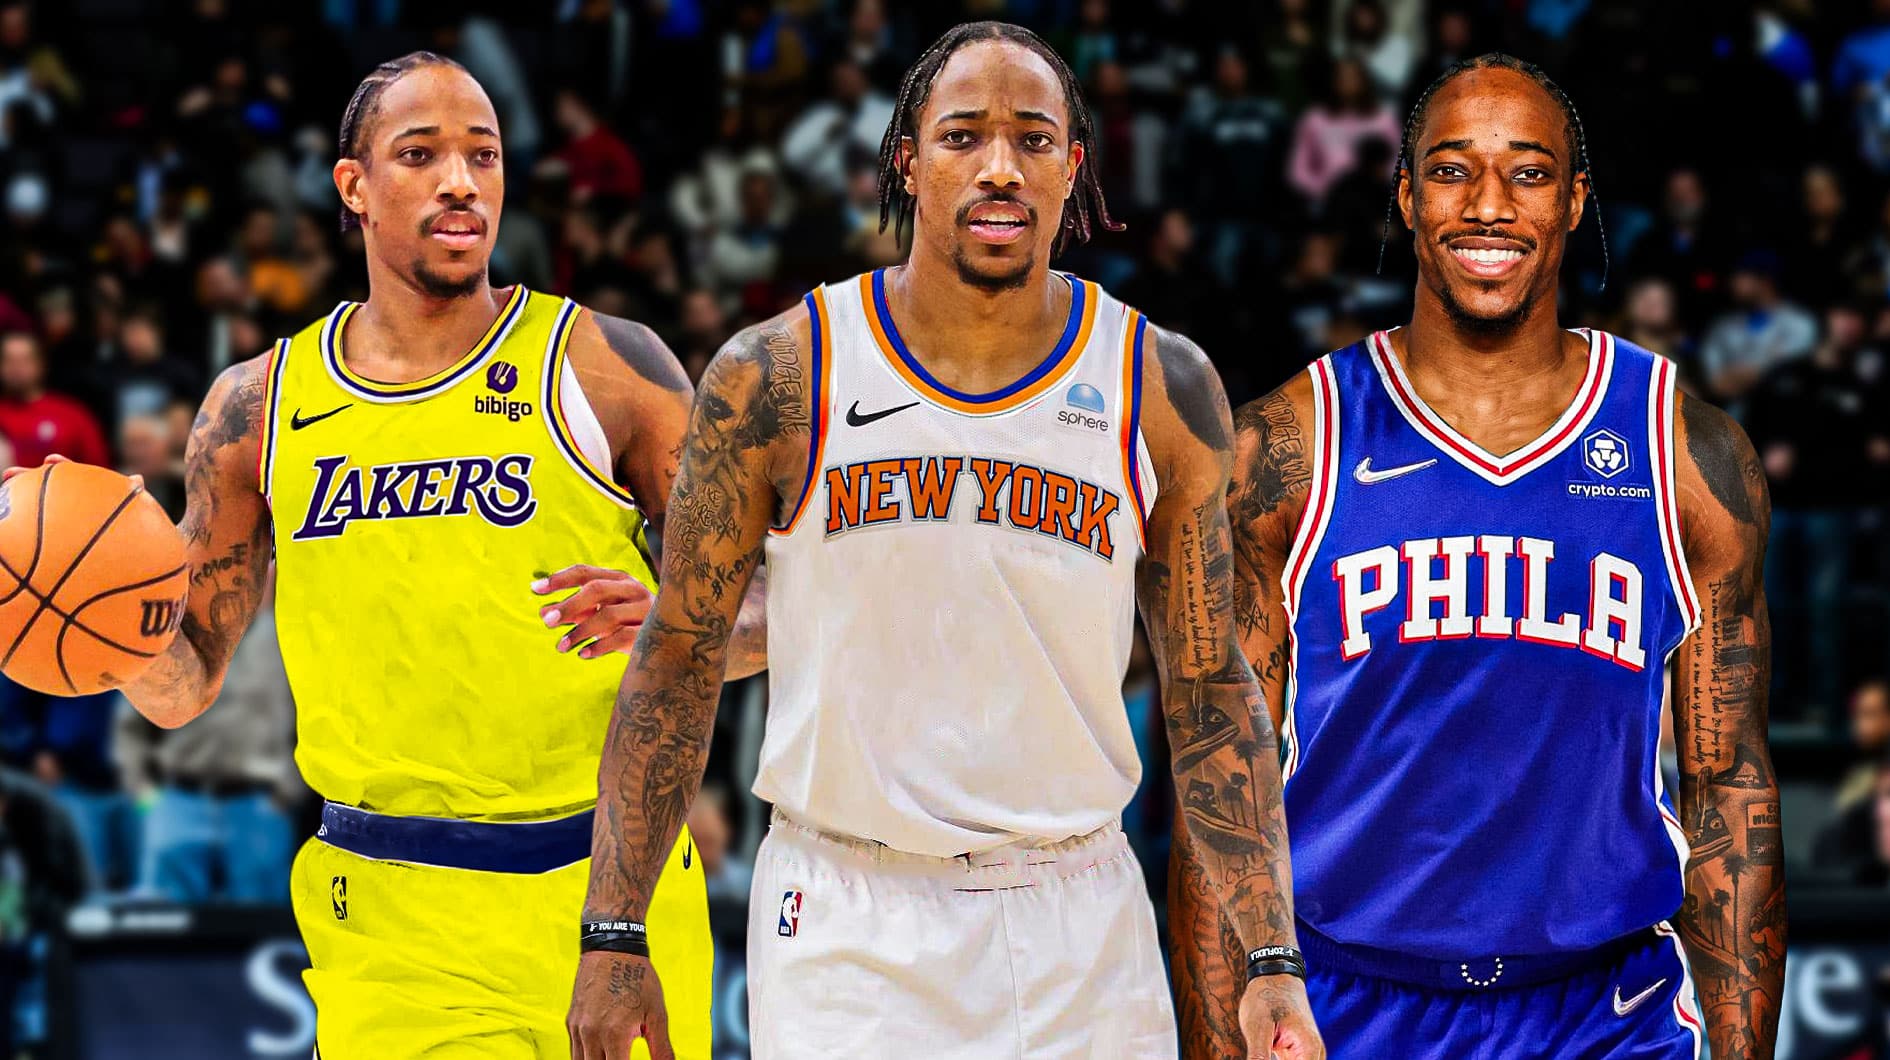 Bulls' DeMar DeRozan in Lakers, Knicks, Sixers jerseys amid trade rumors